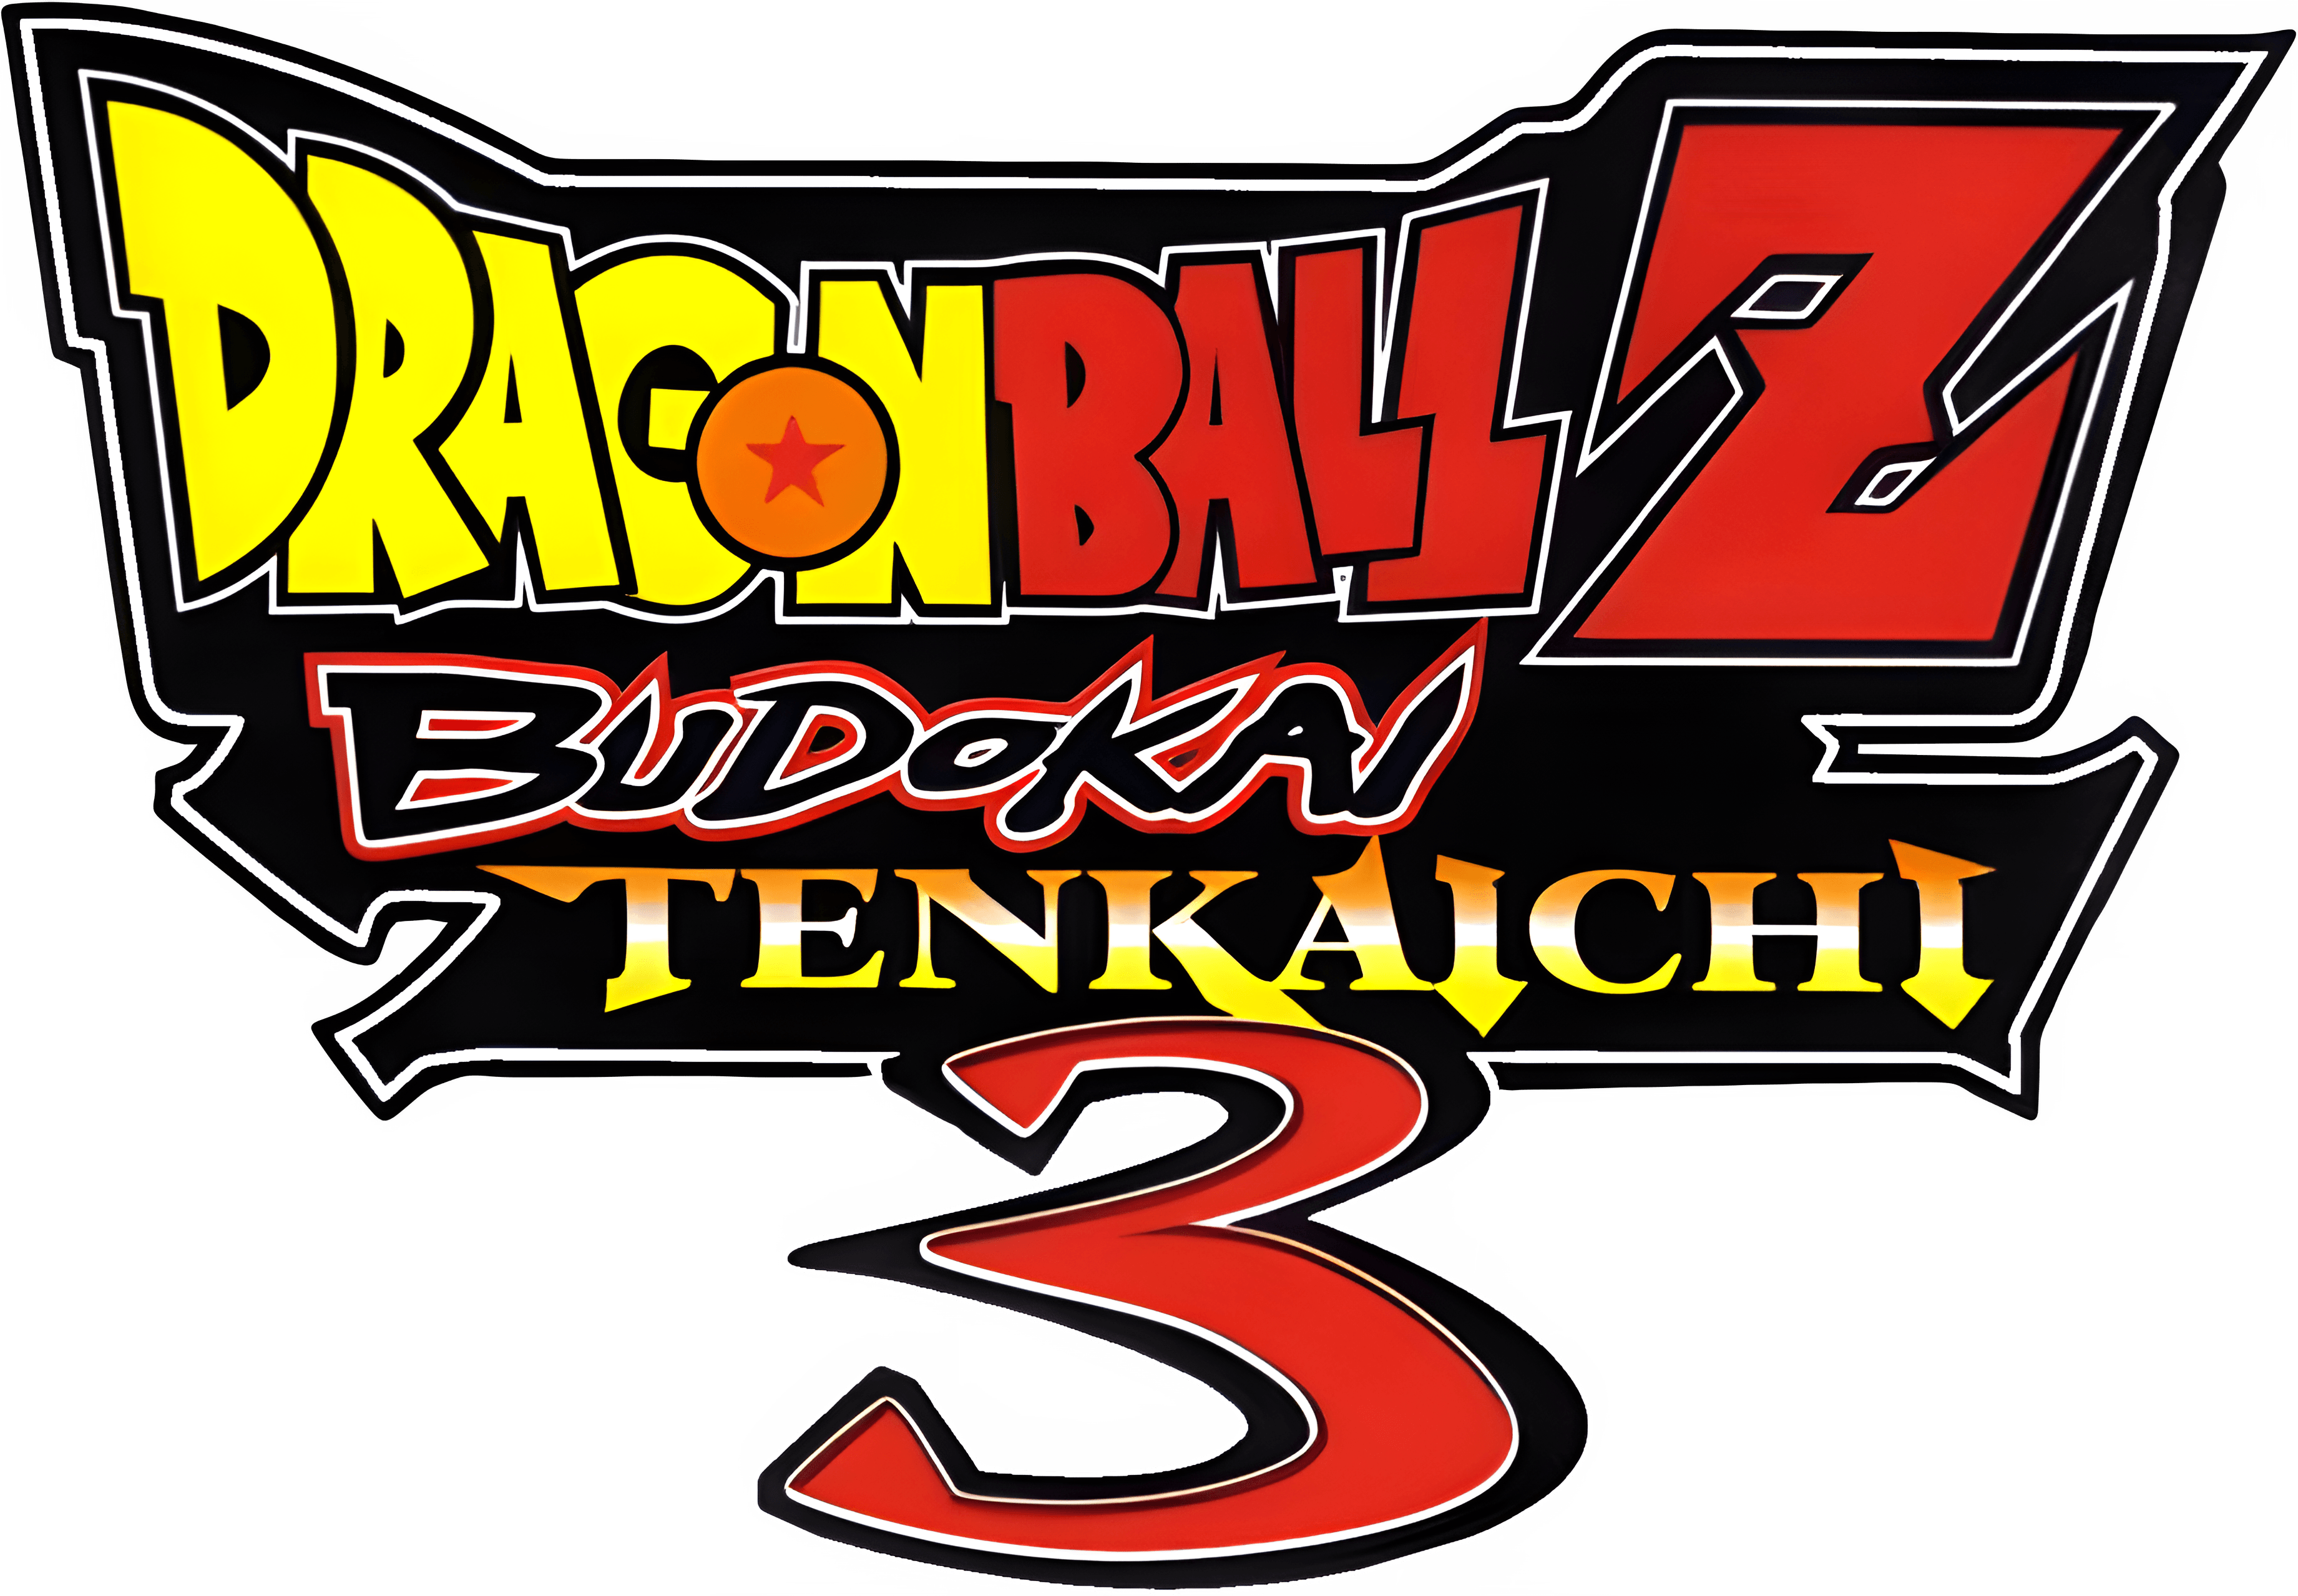 Dragon Ball Z Budokai Tenkaichi 3 Steam Banner by PCPbandit on